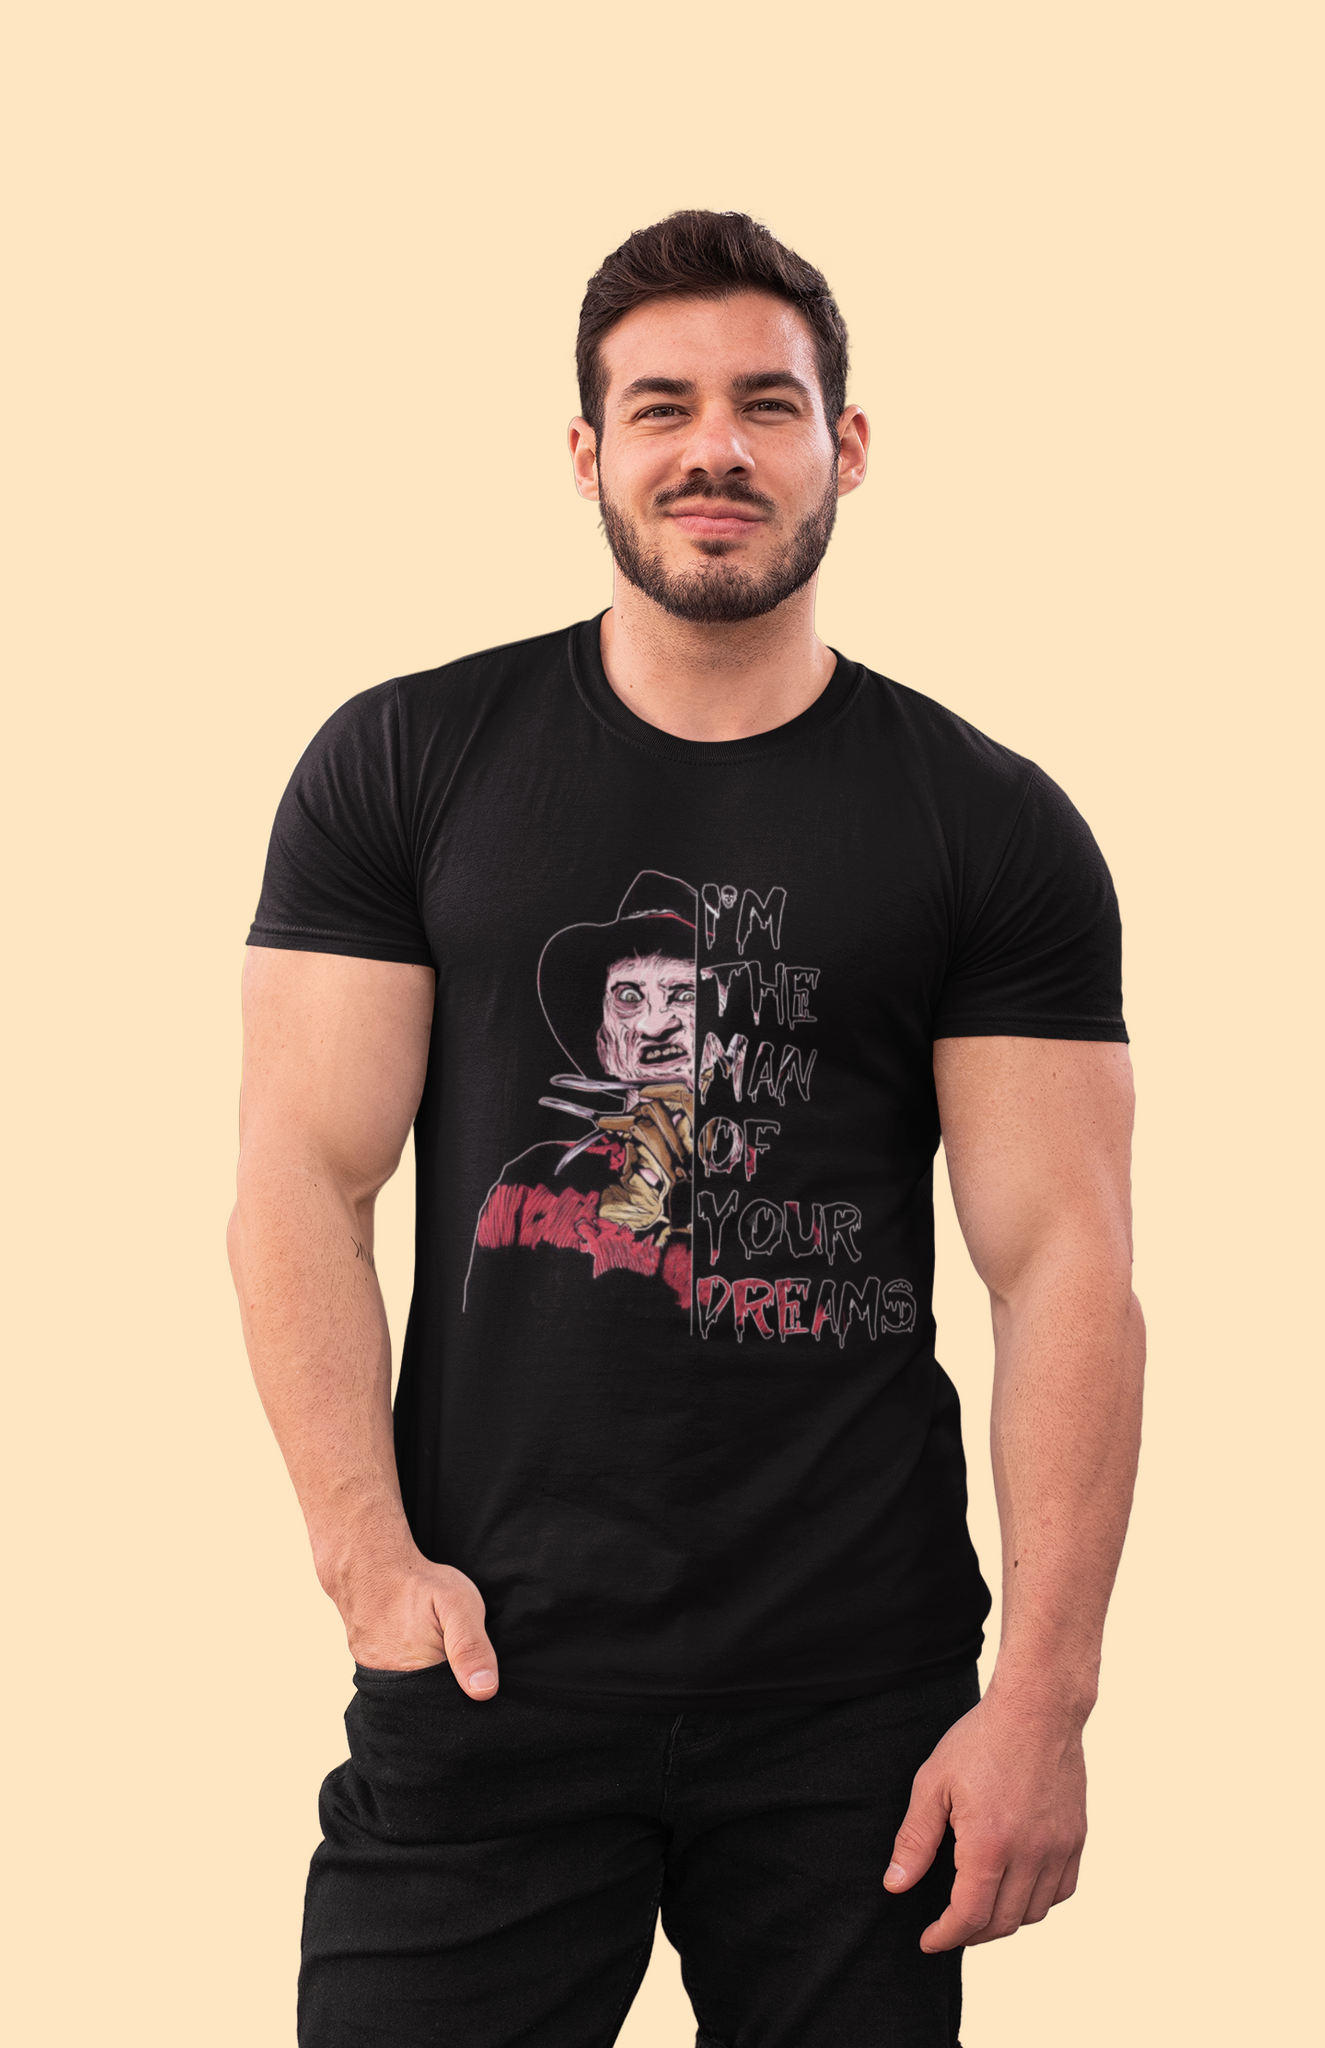 Nightmare On Elm Street T Shirt, Freddy Krueger T Shirt, Im The Man Of Your Dreams Tshirts, Halloween Gifts